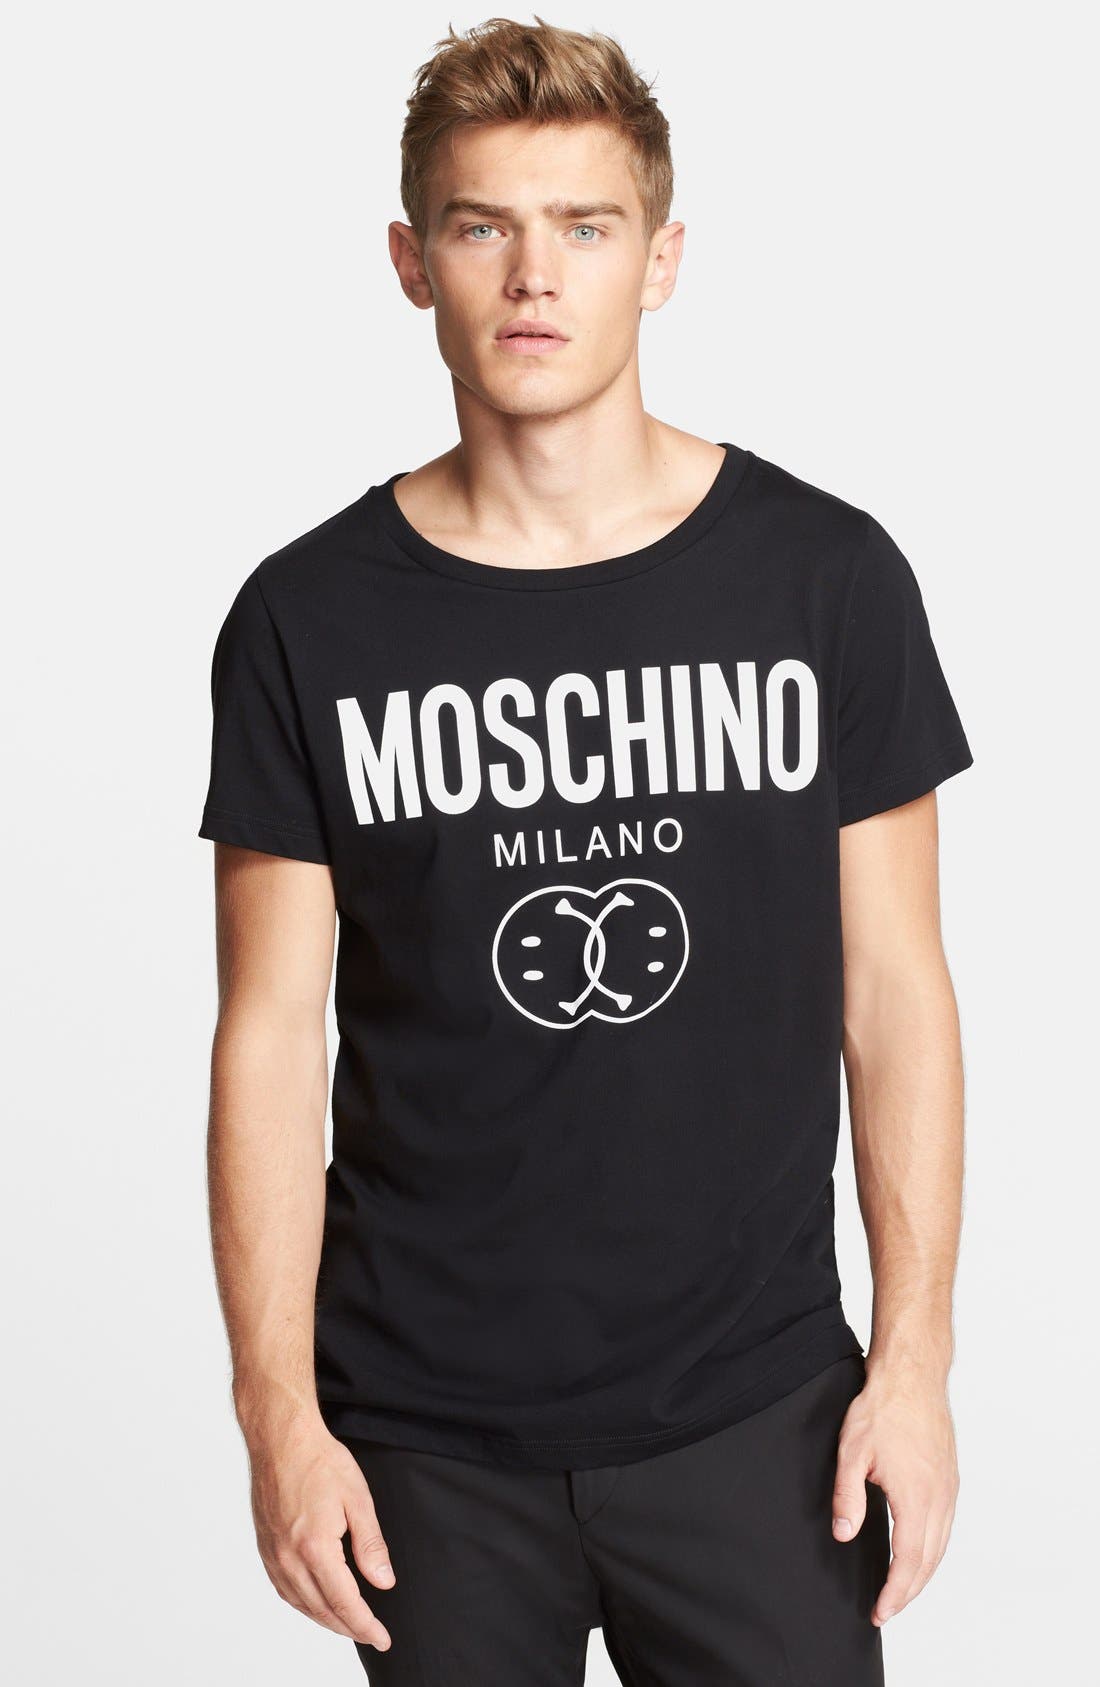 Moschino 'Milano' Logo T-Shirt | Nordstrom